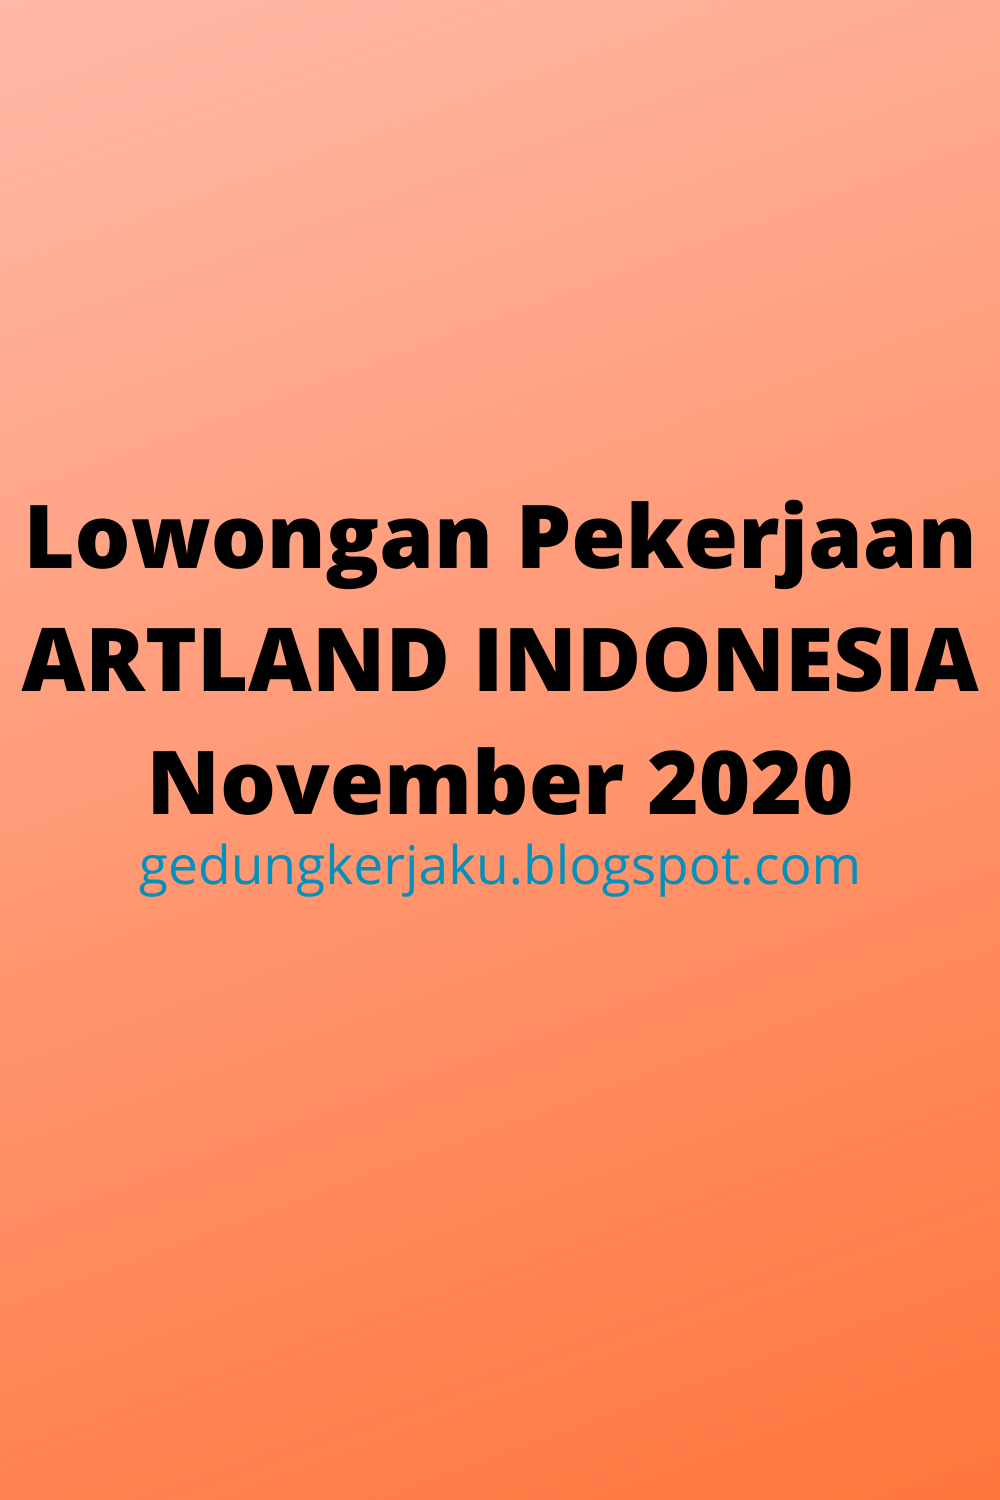 Lowongan Pekerjaan ARTLAND INDONESIA November 2020